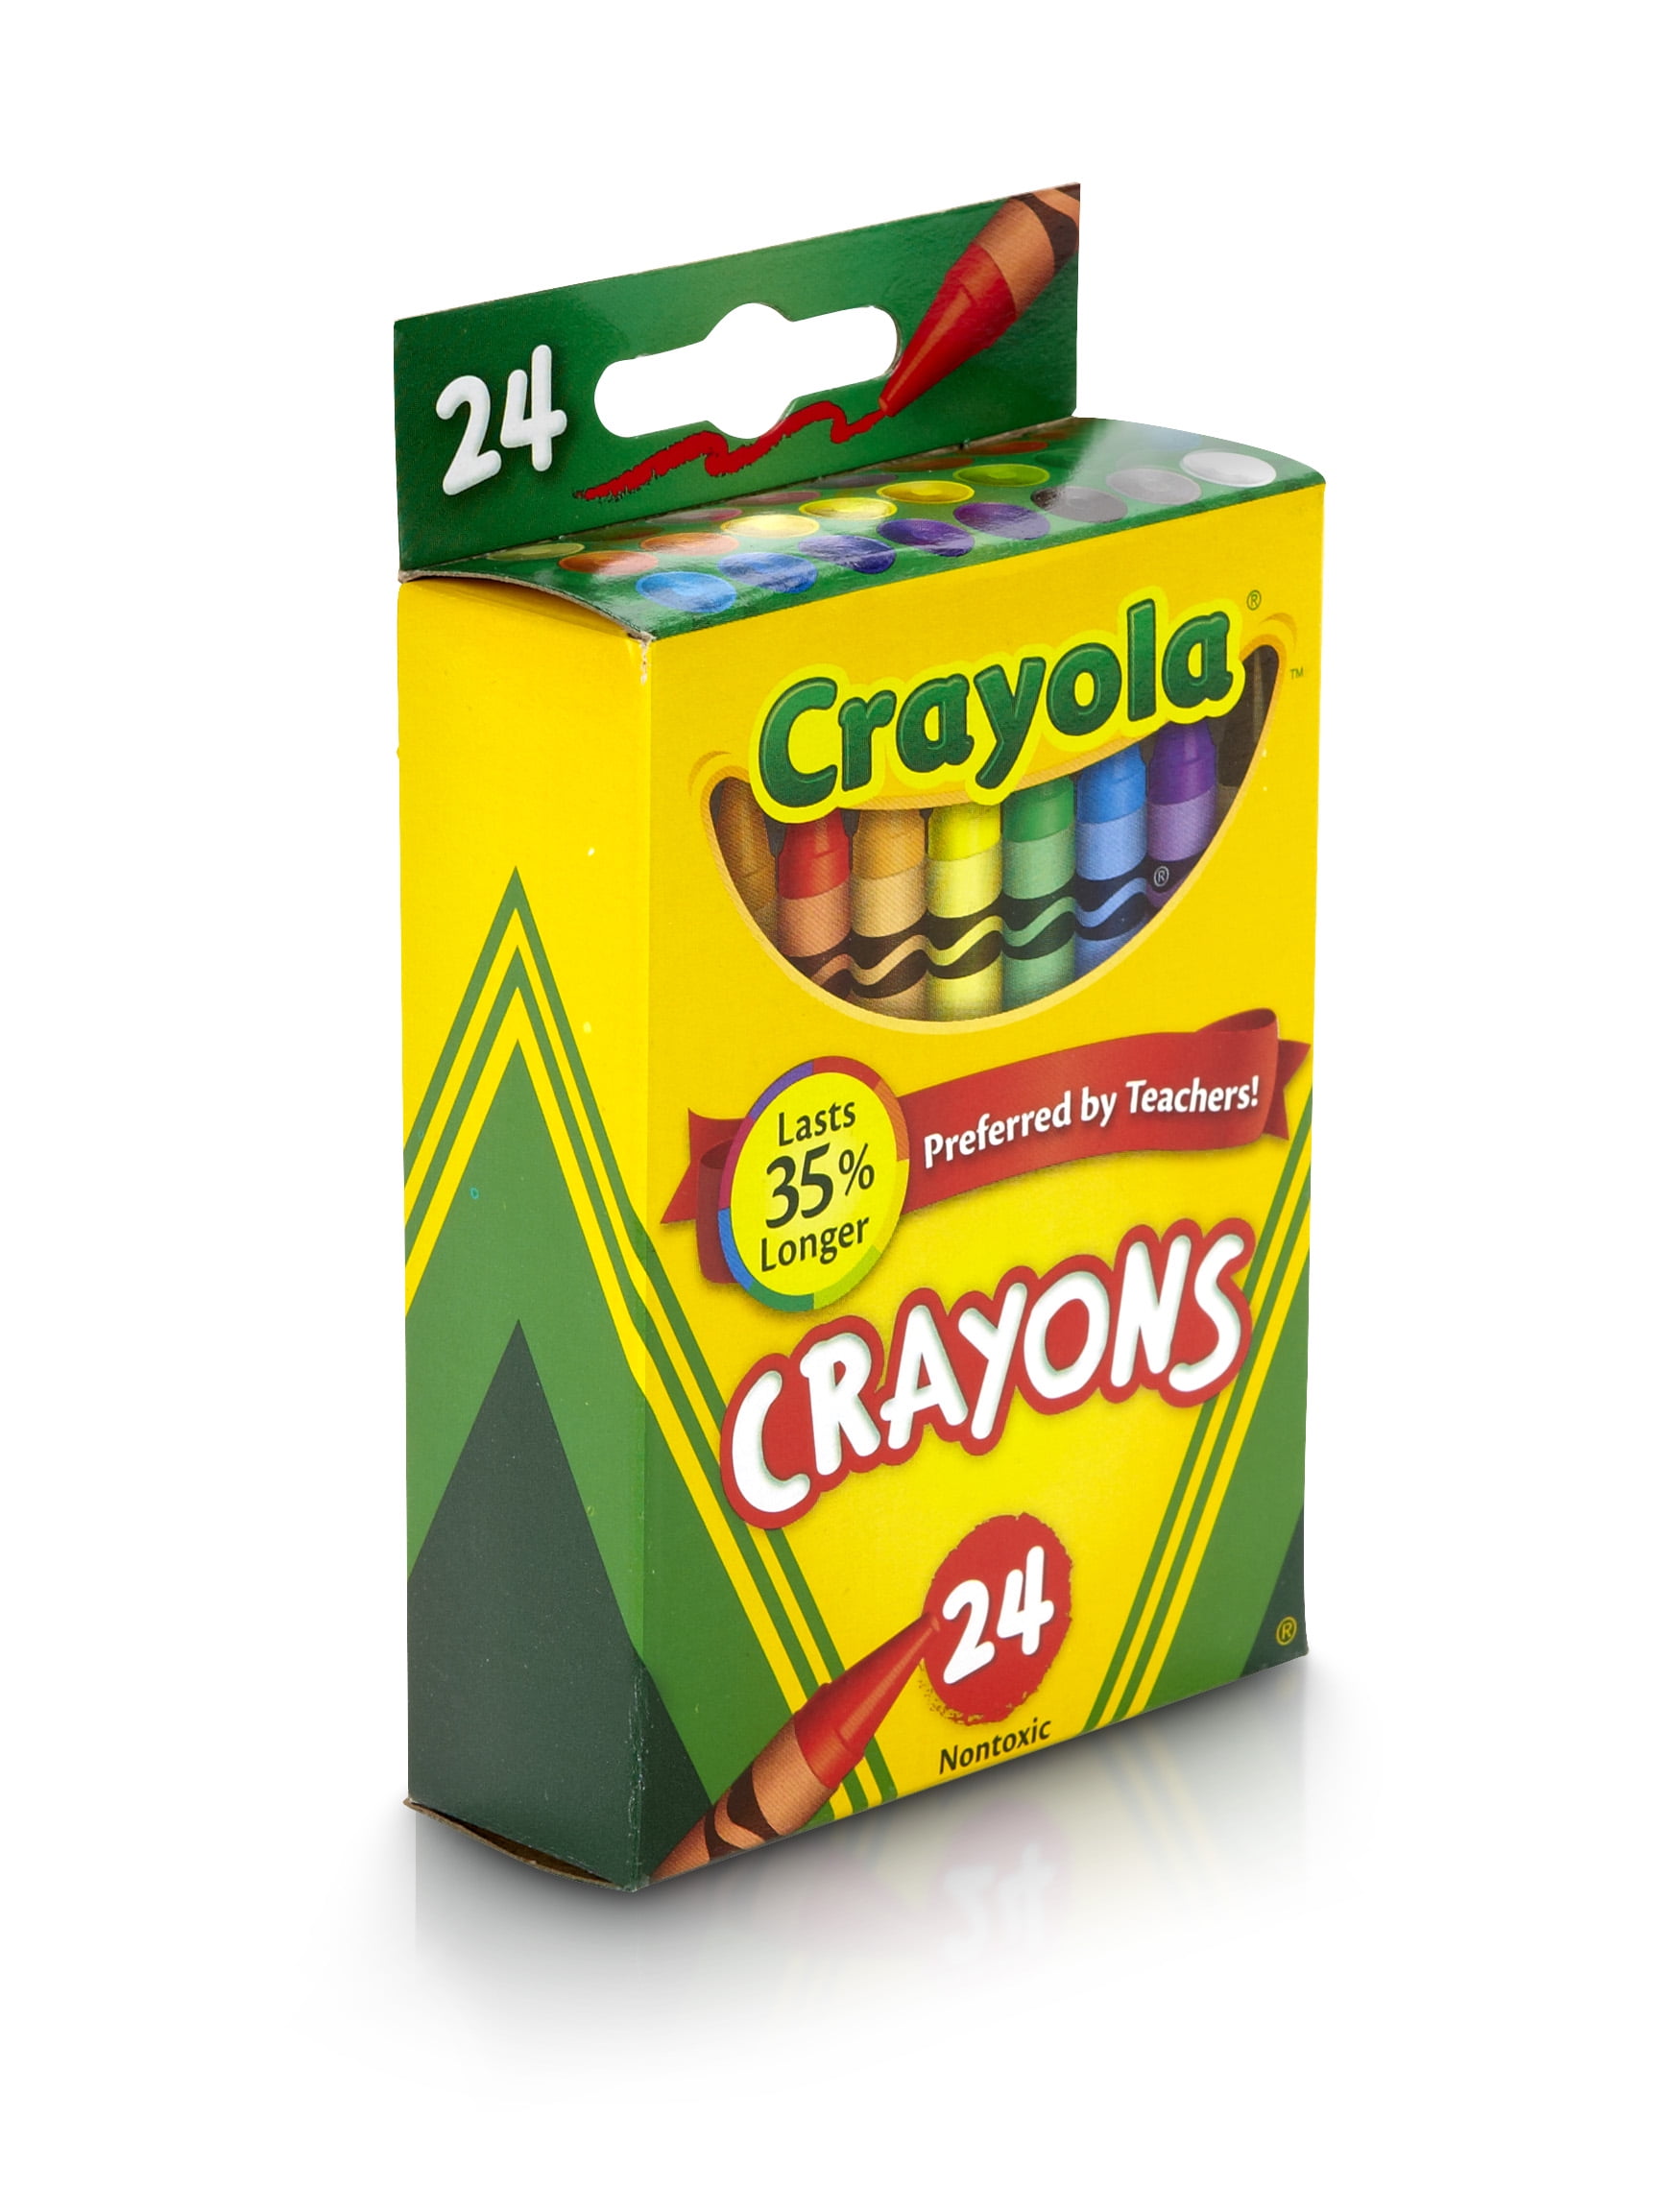 12 Packs: 24 ct. (288 total) Crayola® Neon Crayons